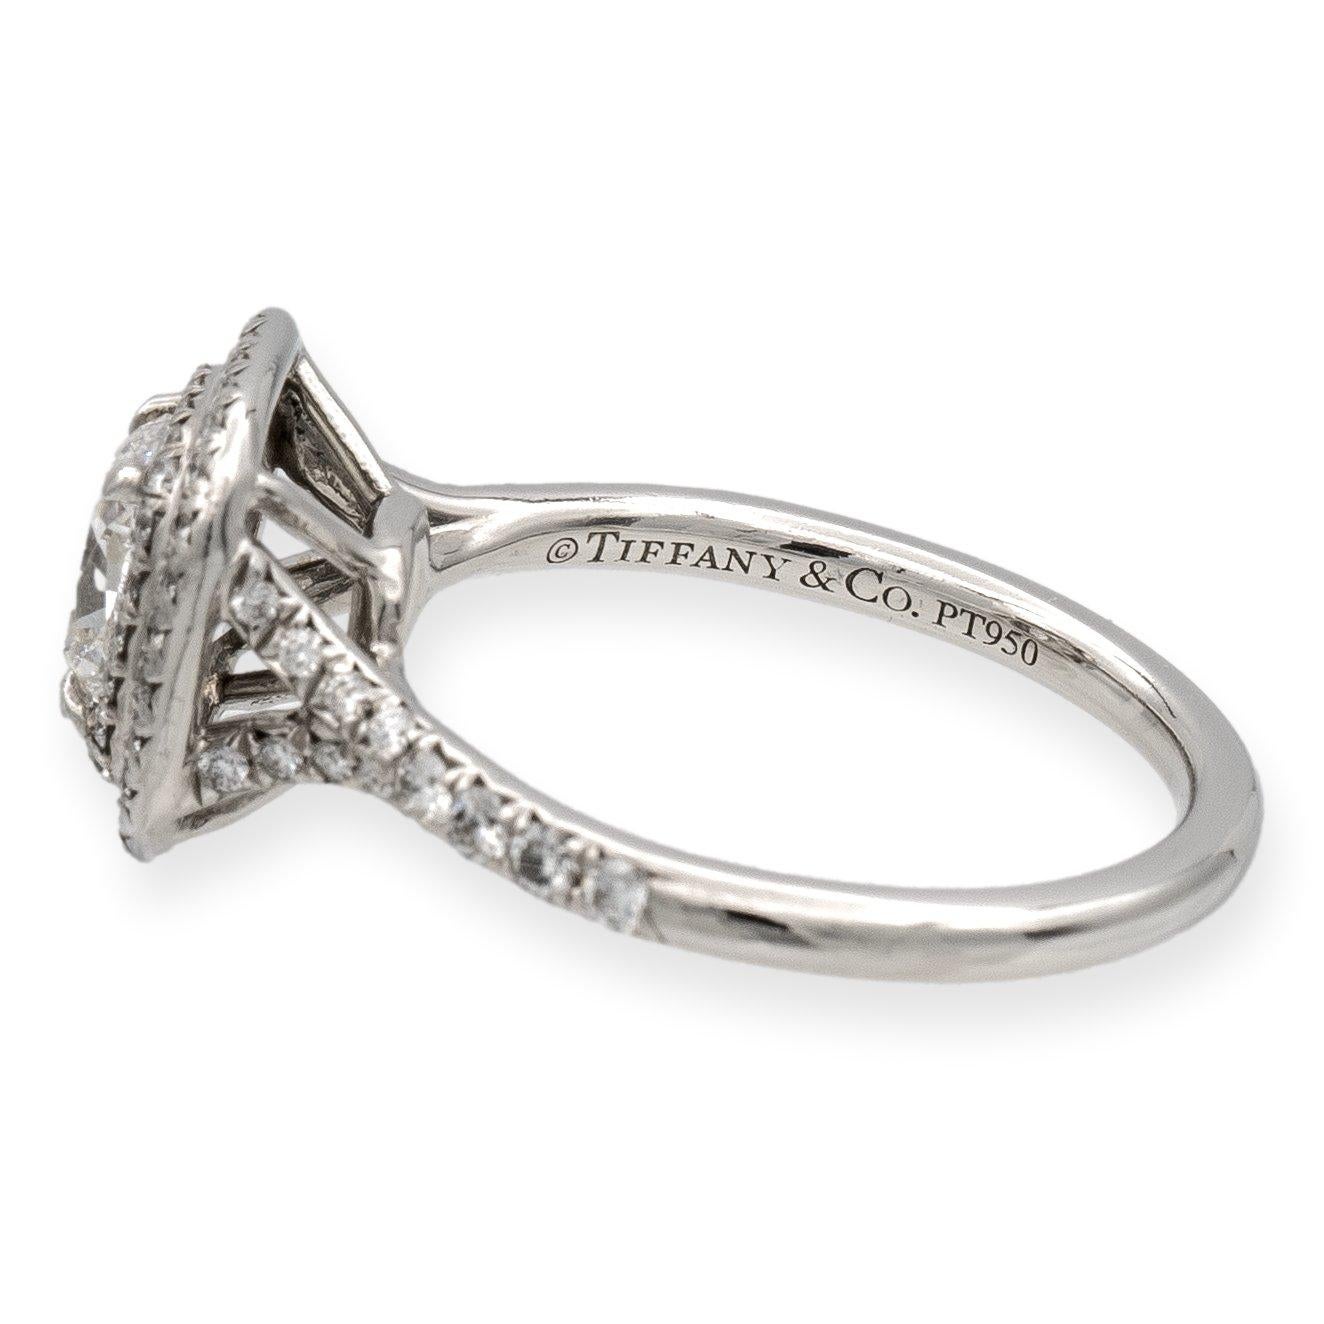 Modern Tiffany & Co. Soleste Platinum Cushion Diamond Engagement Ring 1.29Cts Ttl HVS1